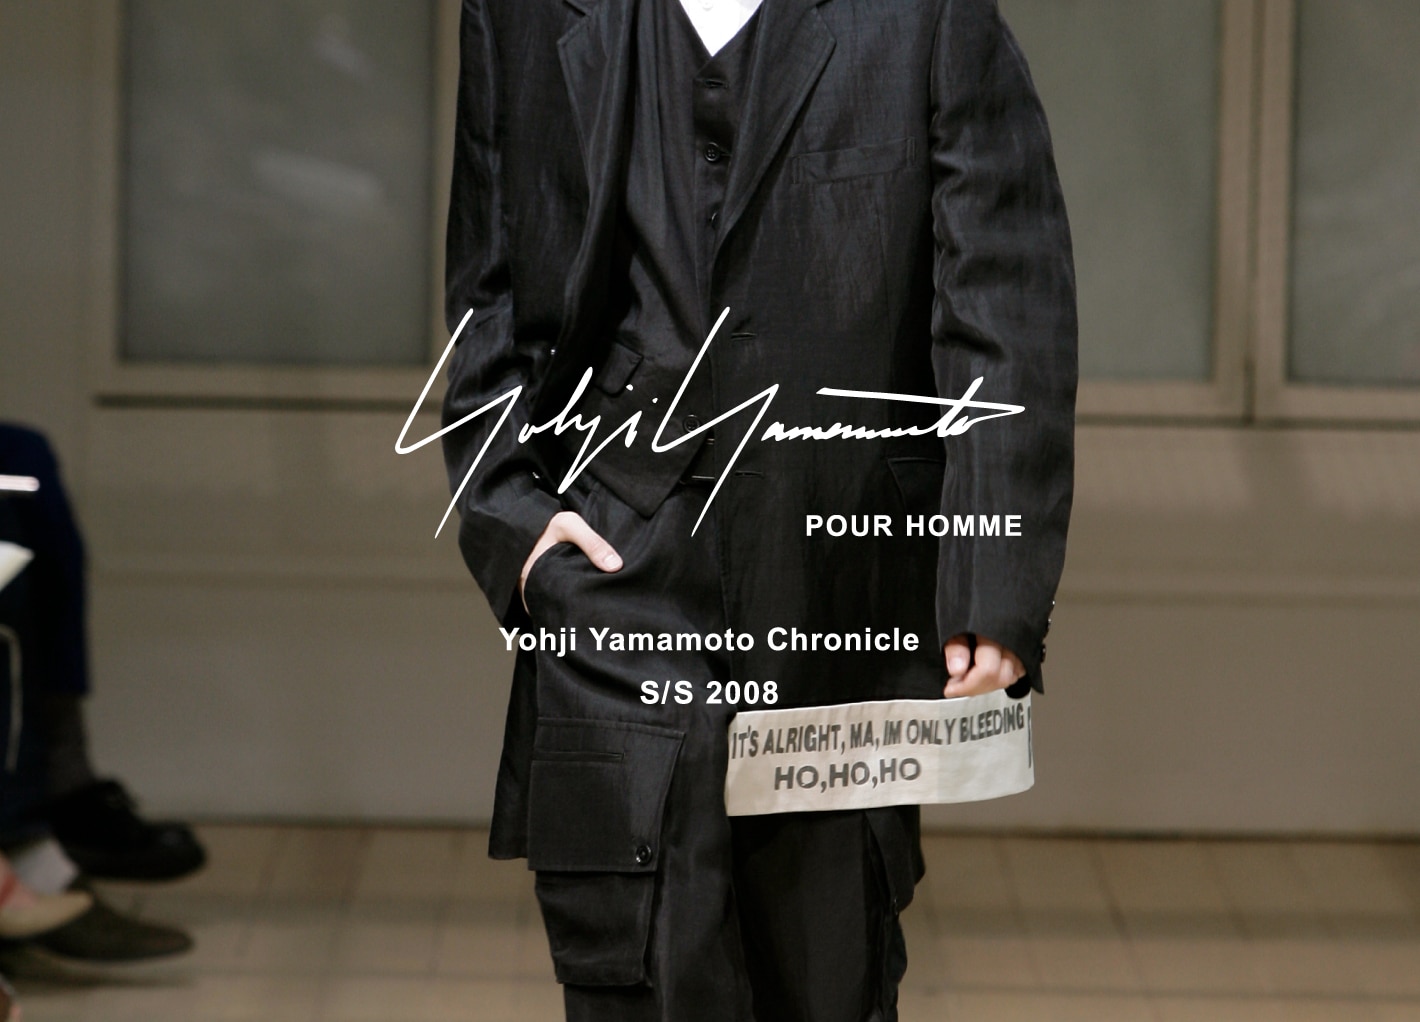 Yohji Yamamoto Chronicle – POUR HOMME SS 2008